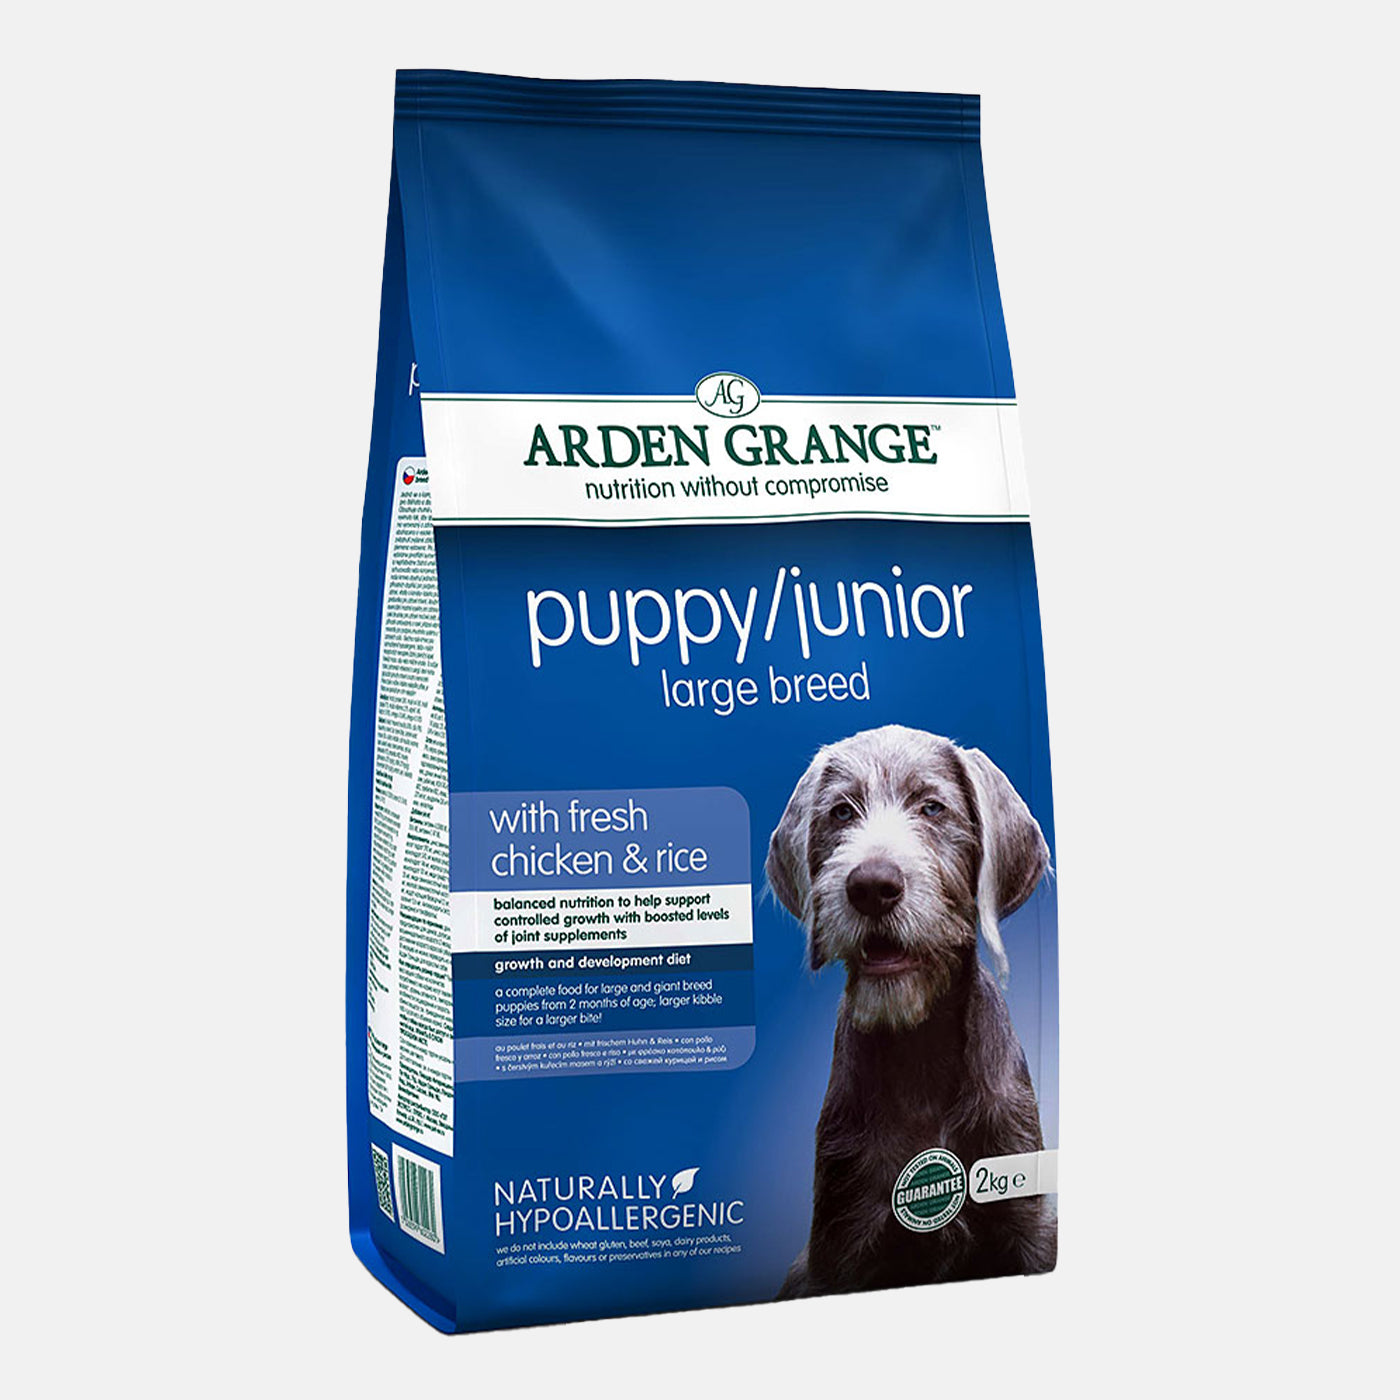 Arden Grange Puppy/Junior Large Breed Dry Dog Food with Chicken